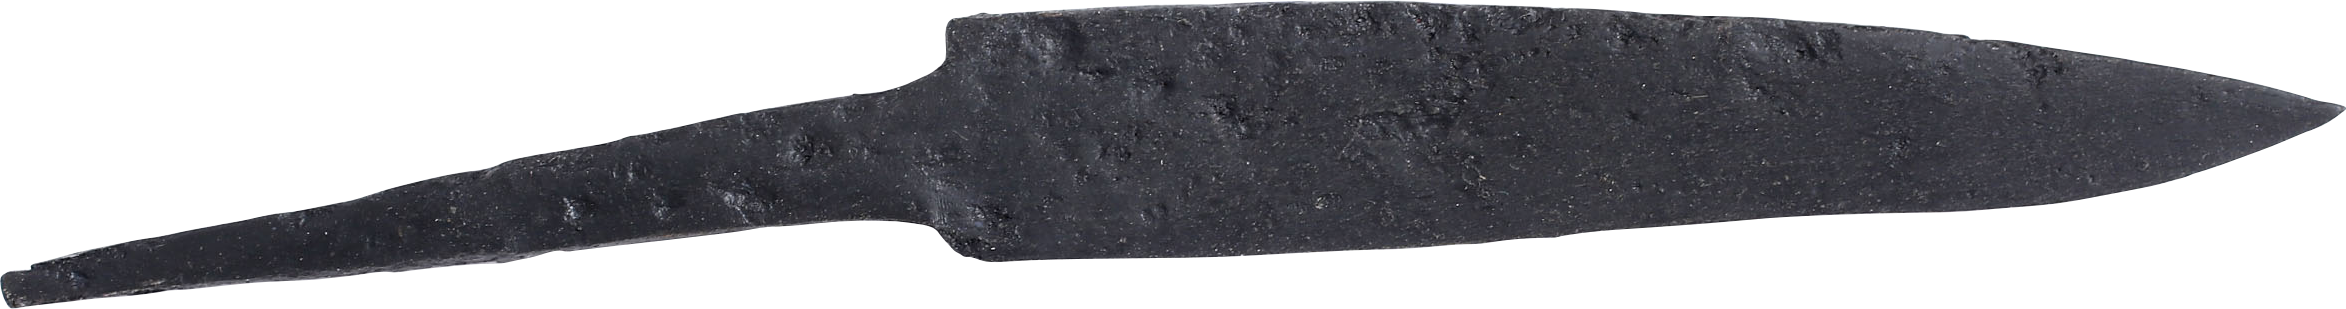 ROMAN SIDE KNIFE, C.100-250 AD